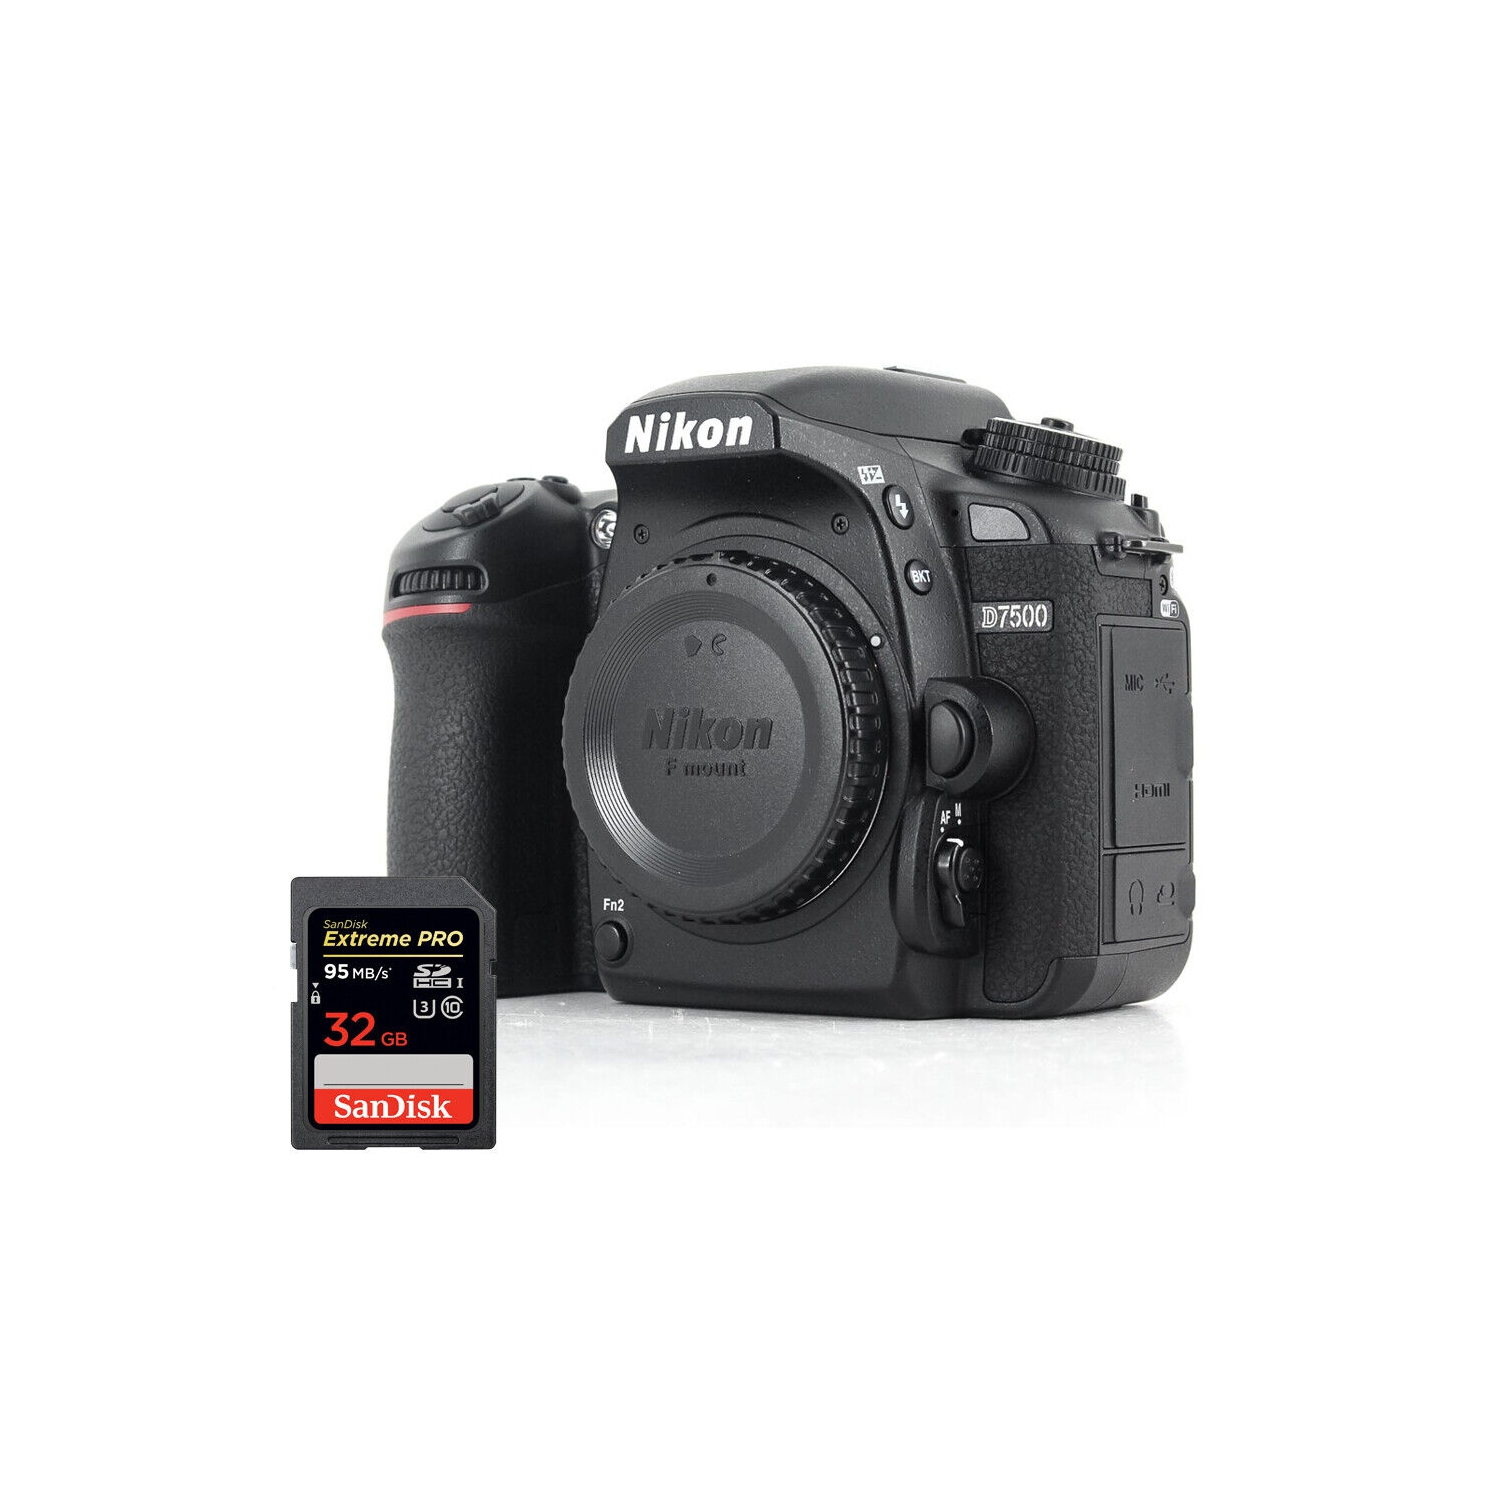 Nikon D7500 4K Camera (Body Only) 1581 + Sandisk Extreme Pro 32GB SD